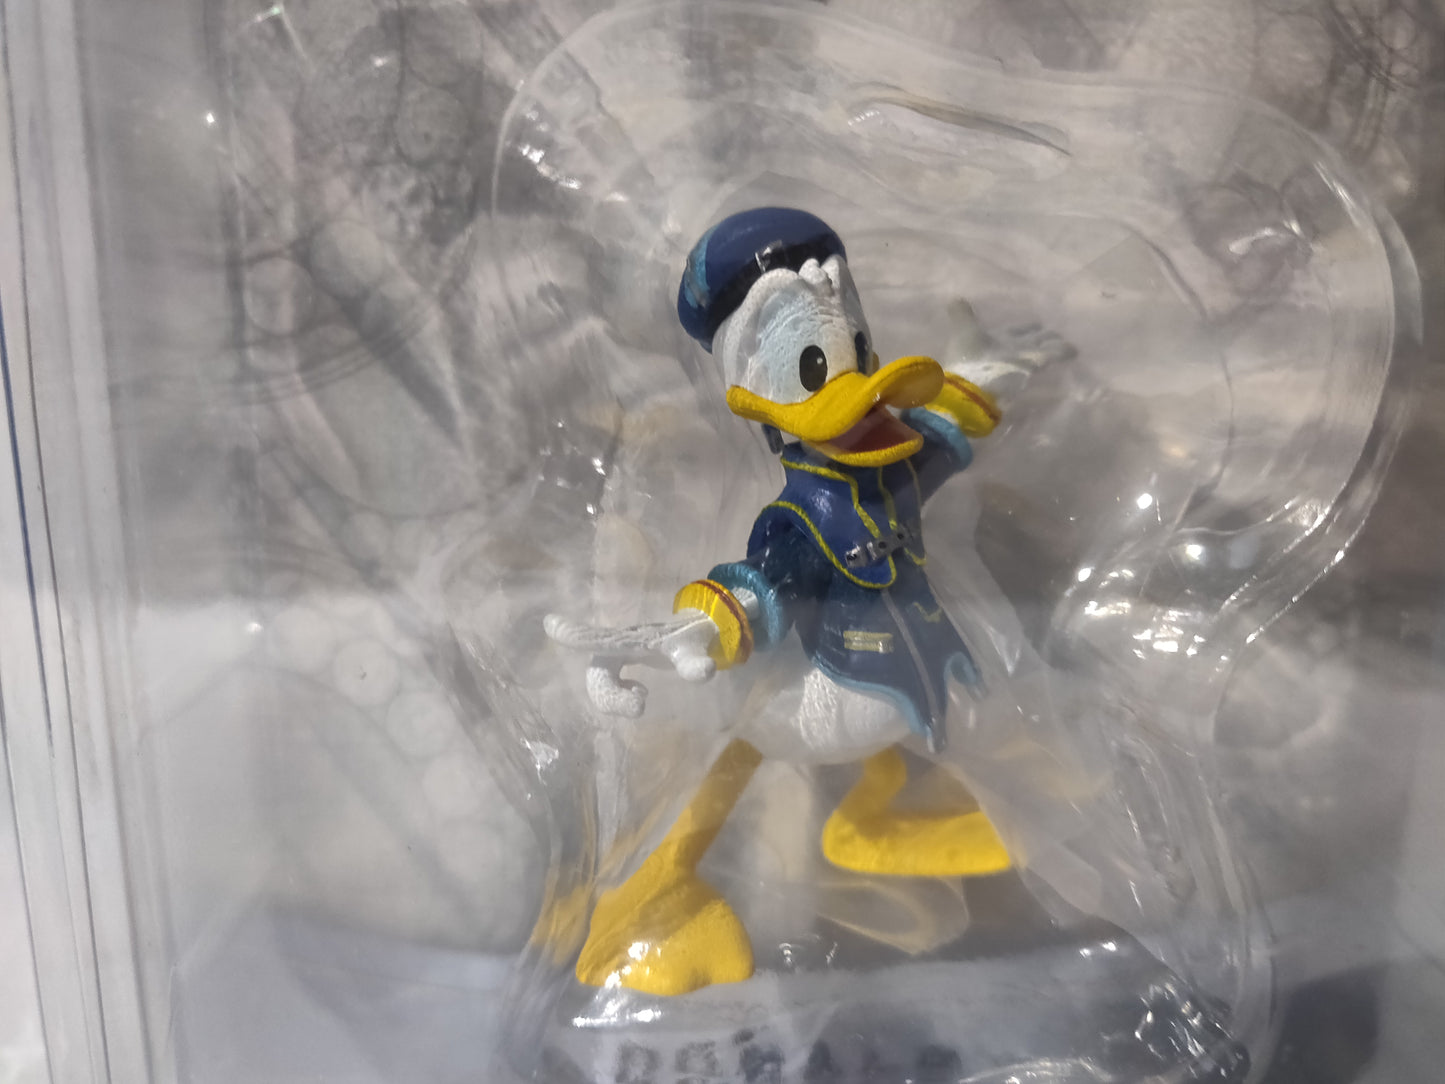 Kingdom Hearts: Donald ultra detail figure